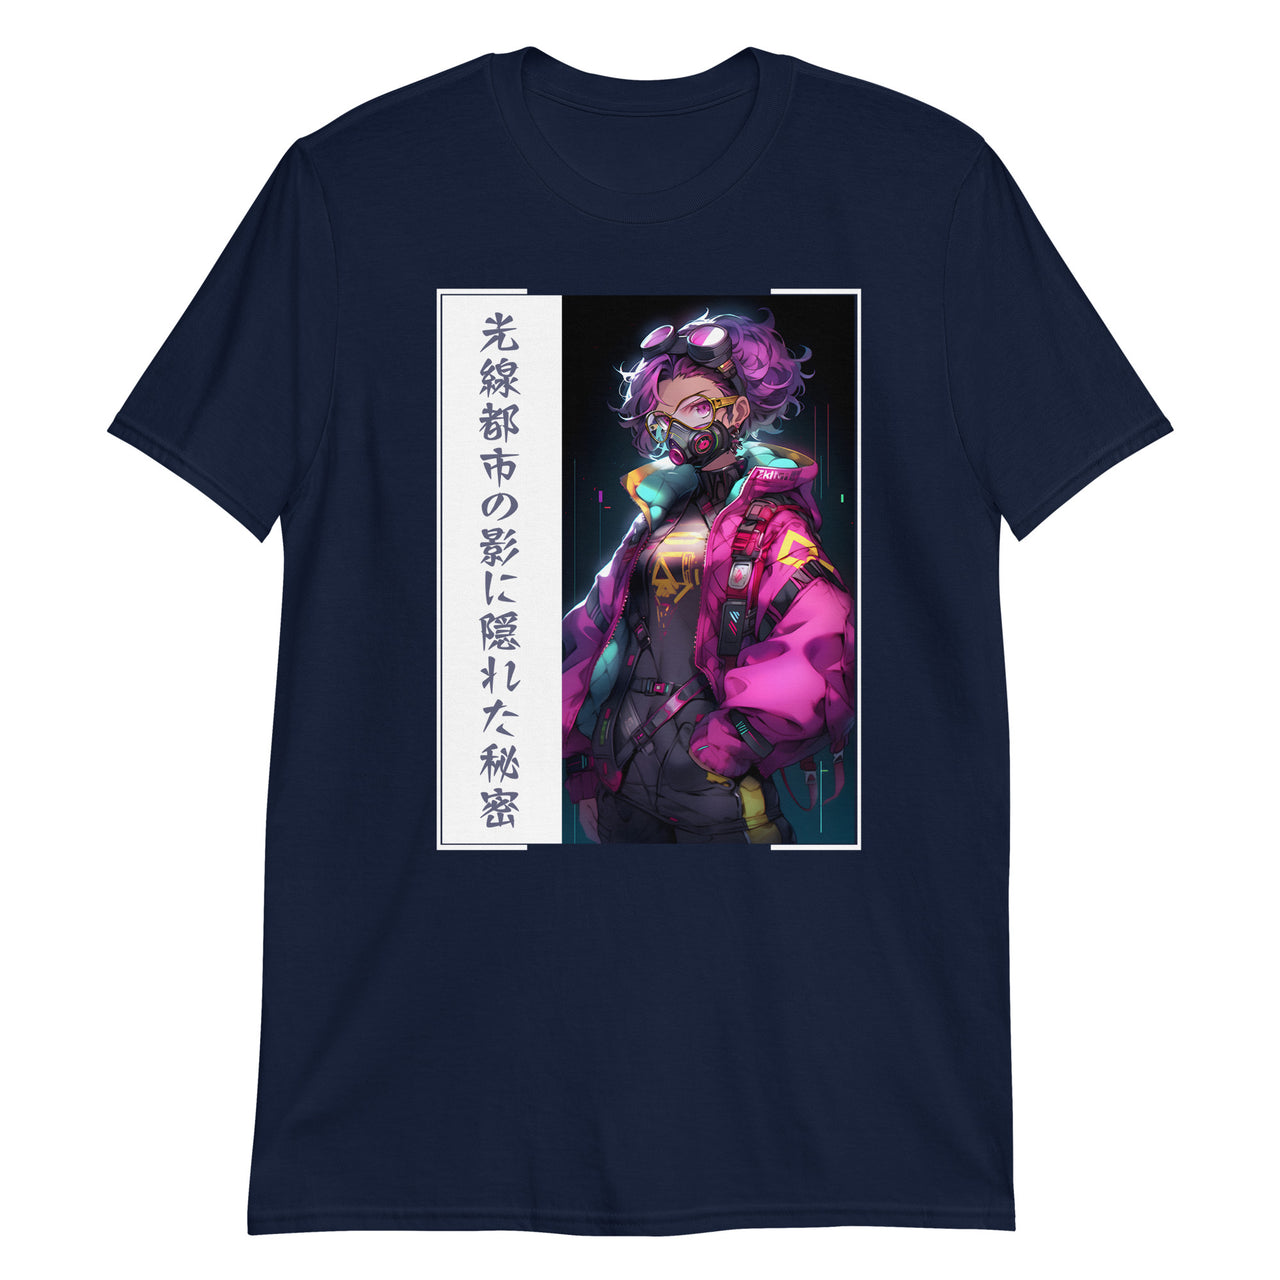 Gritty Tokyo Cyberpunk Anime Girl T-Shirt